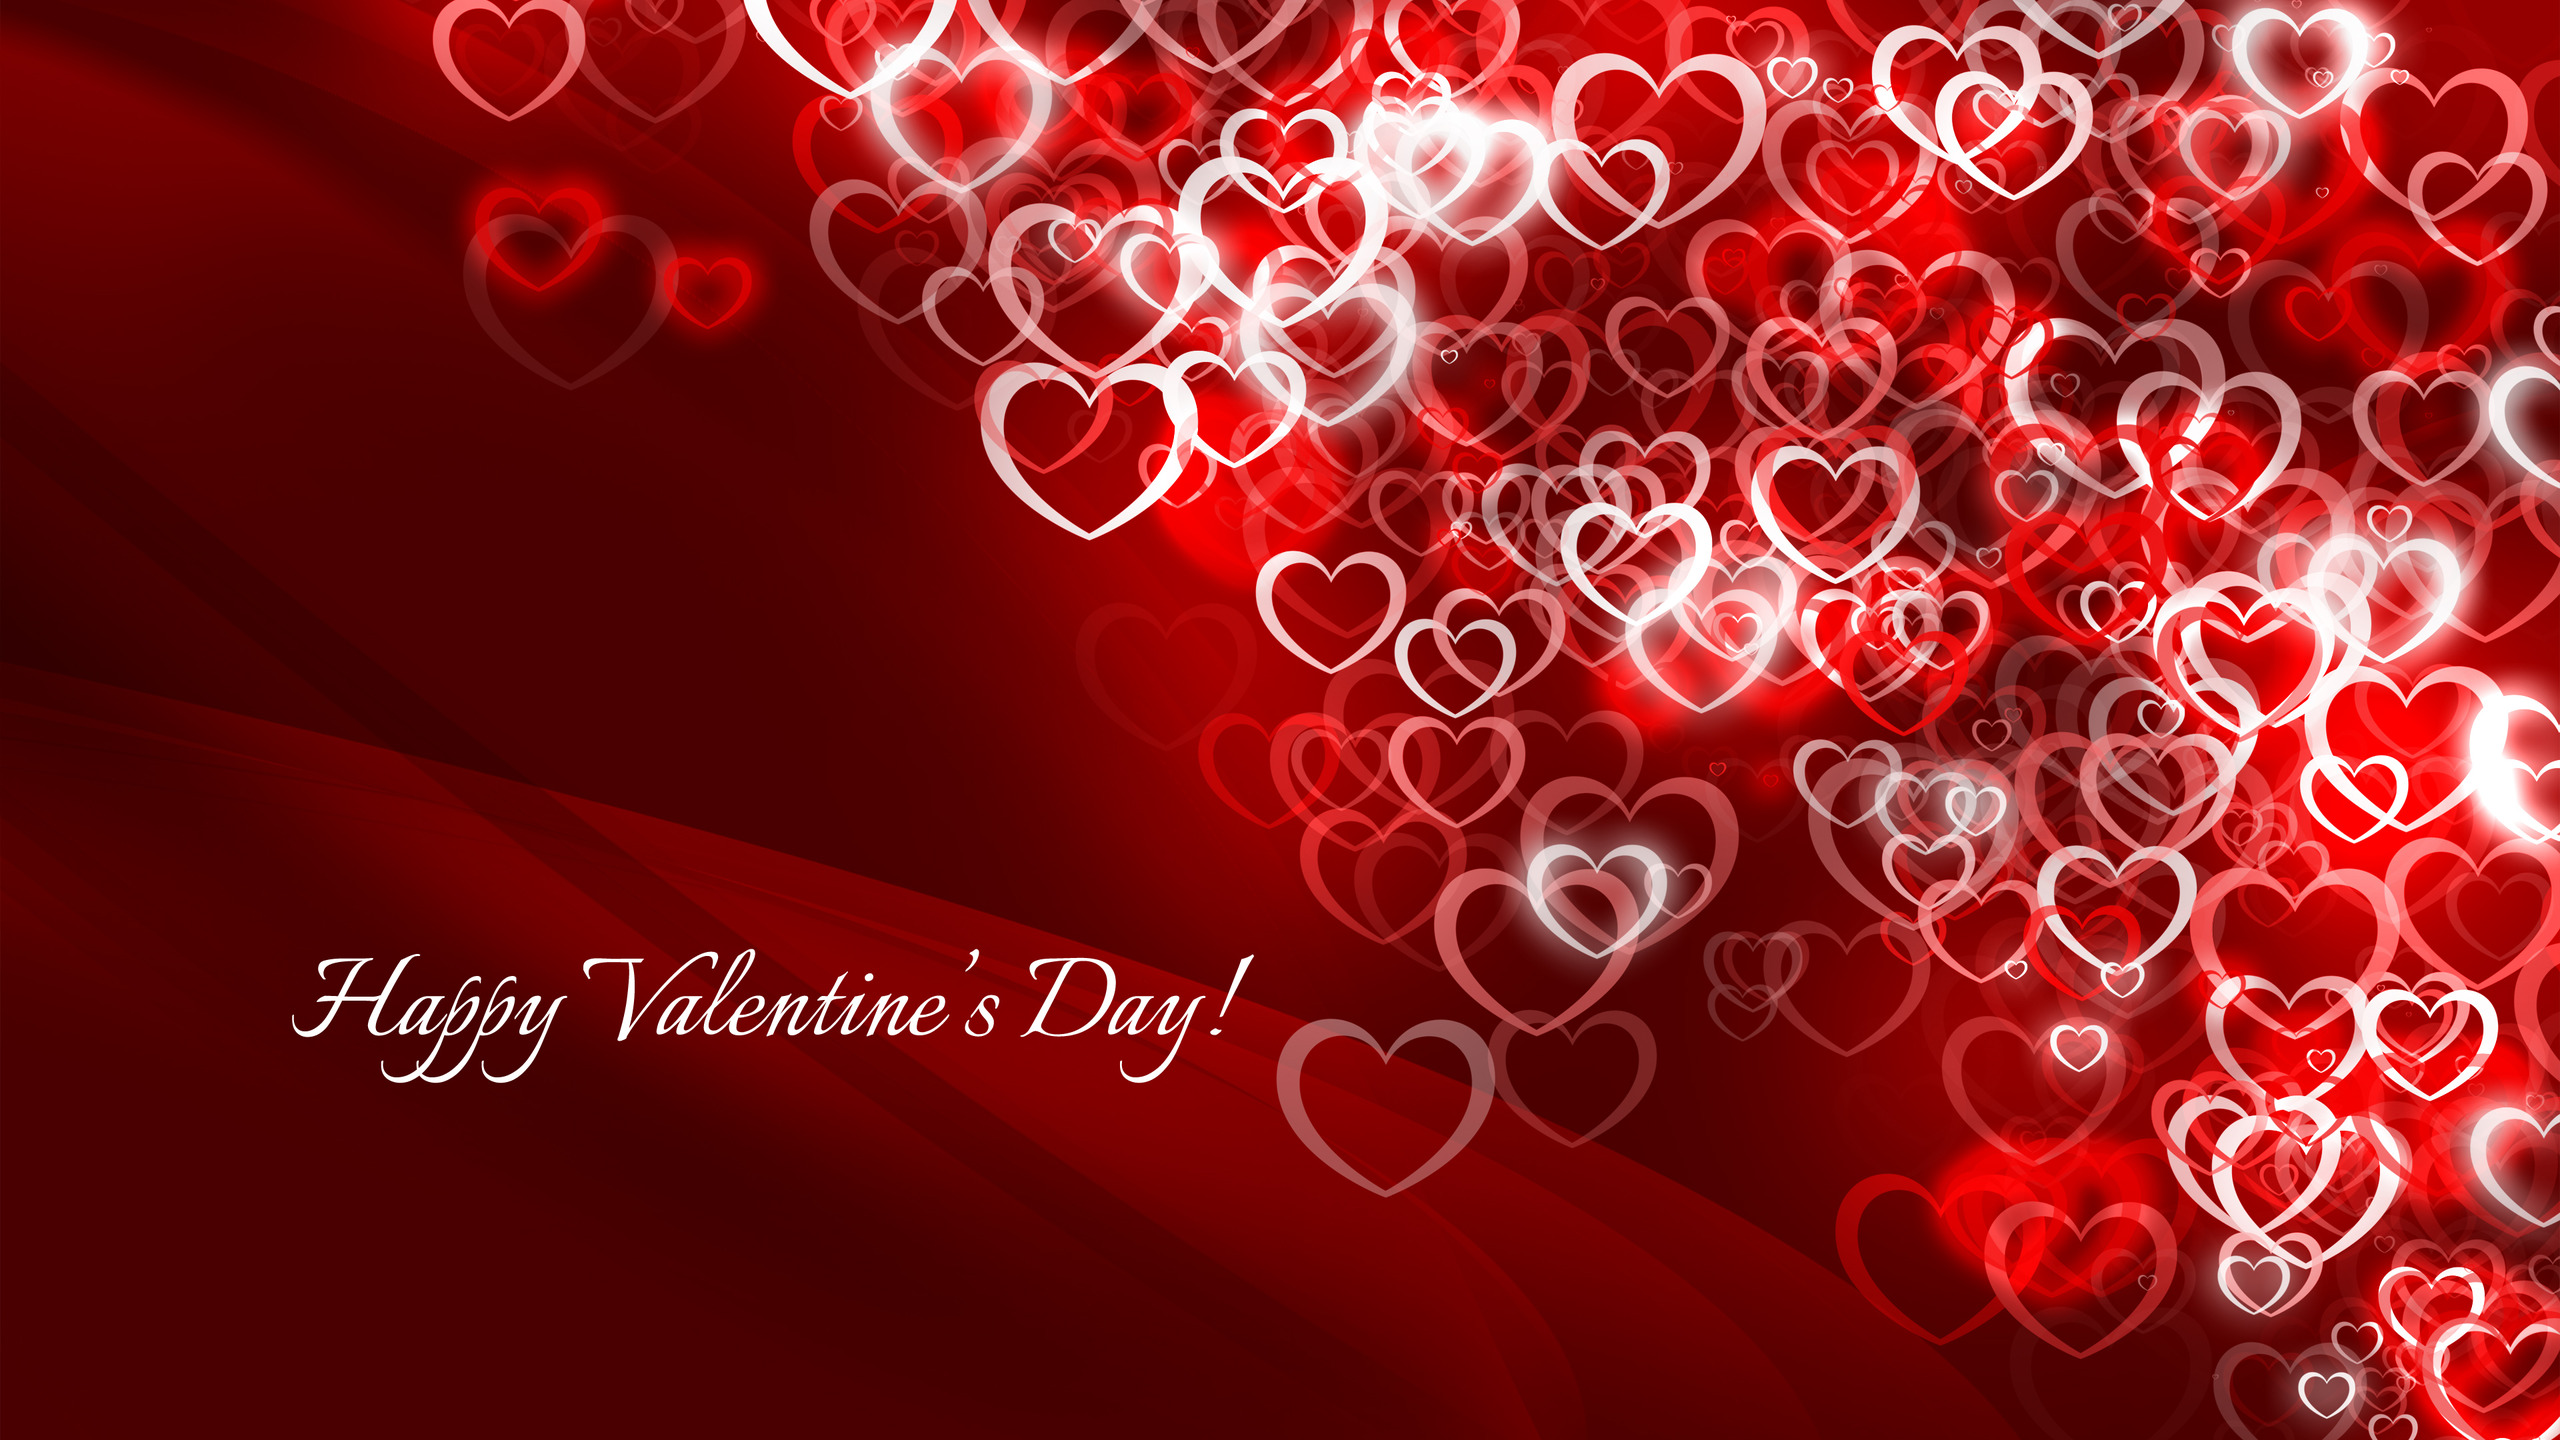 Happy Valentines Day Wallpaper Image